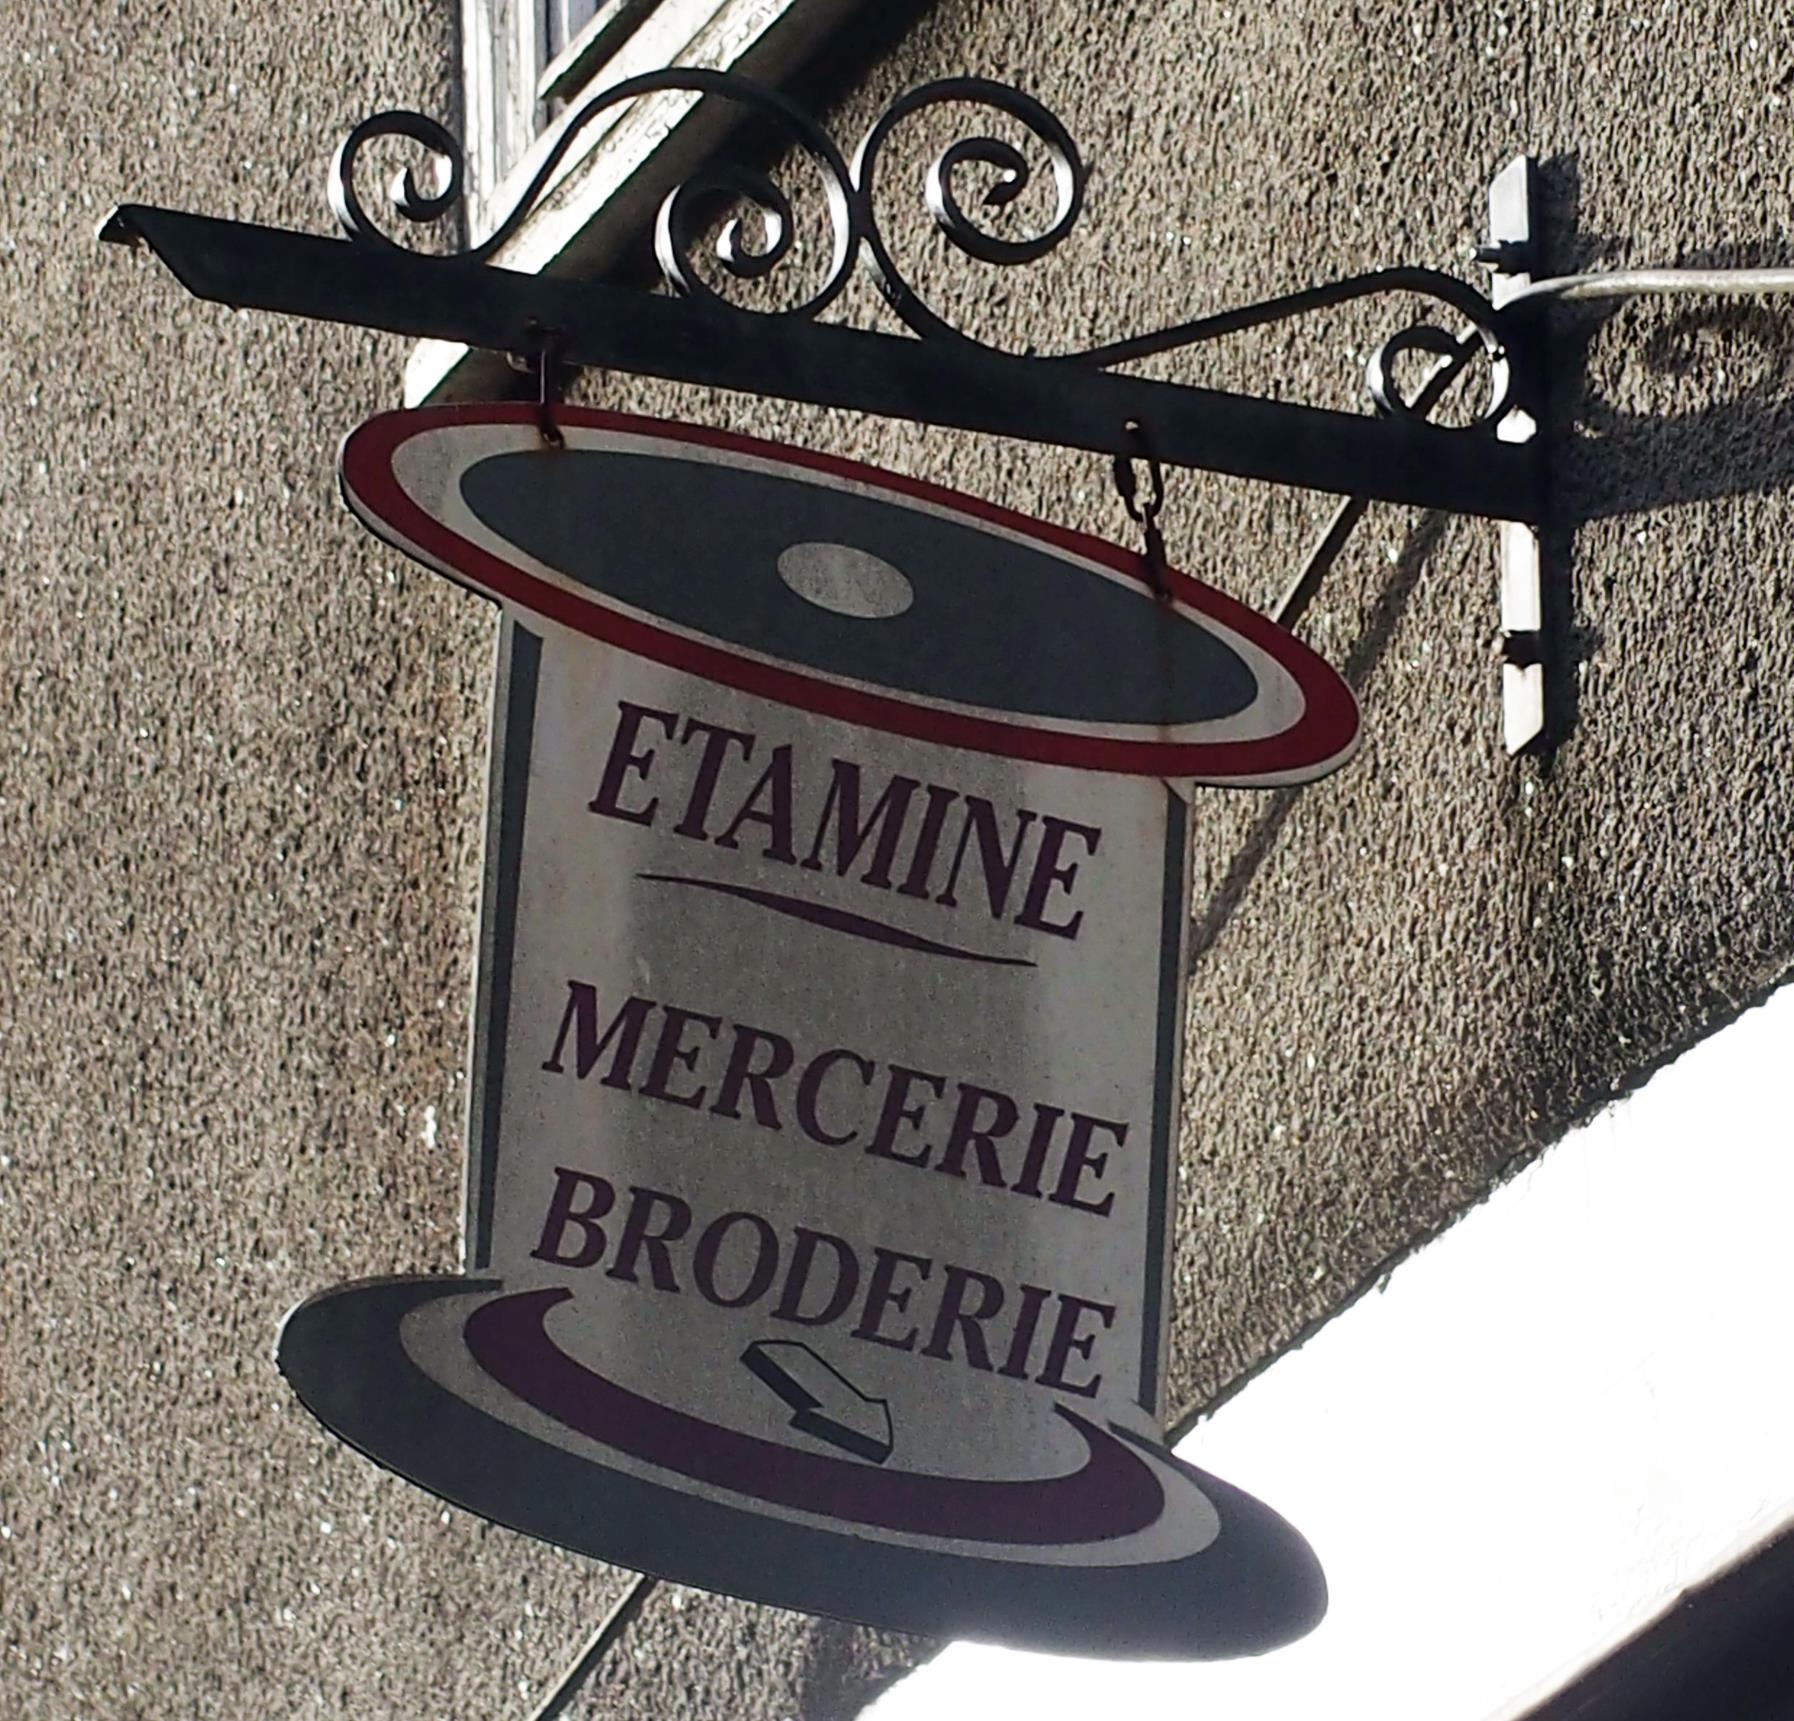 Etamine - Mercerie - Broderie - Dinan